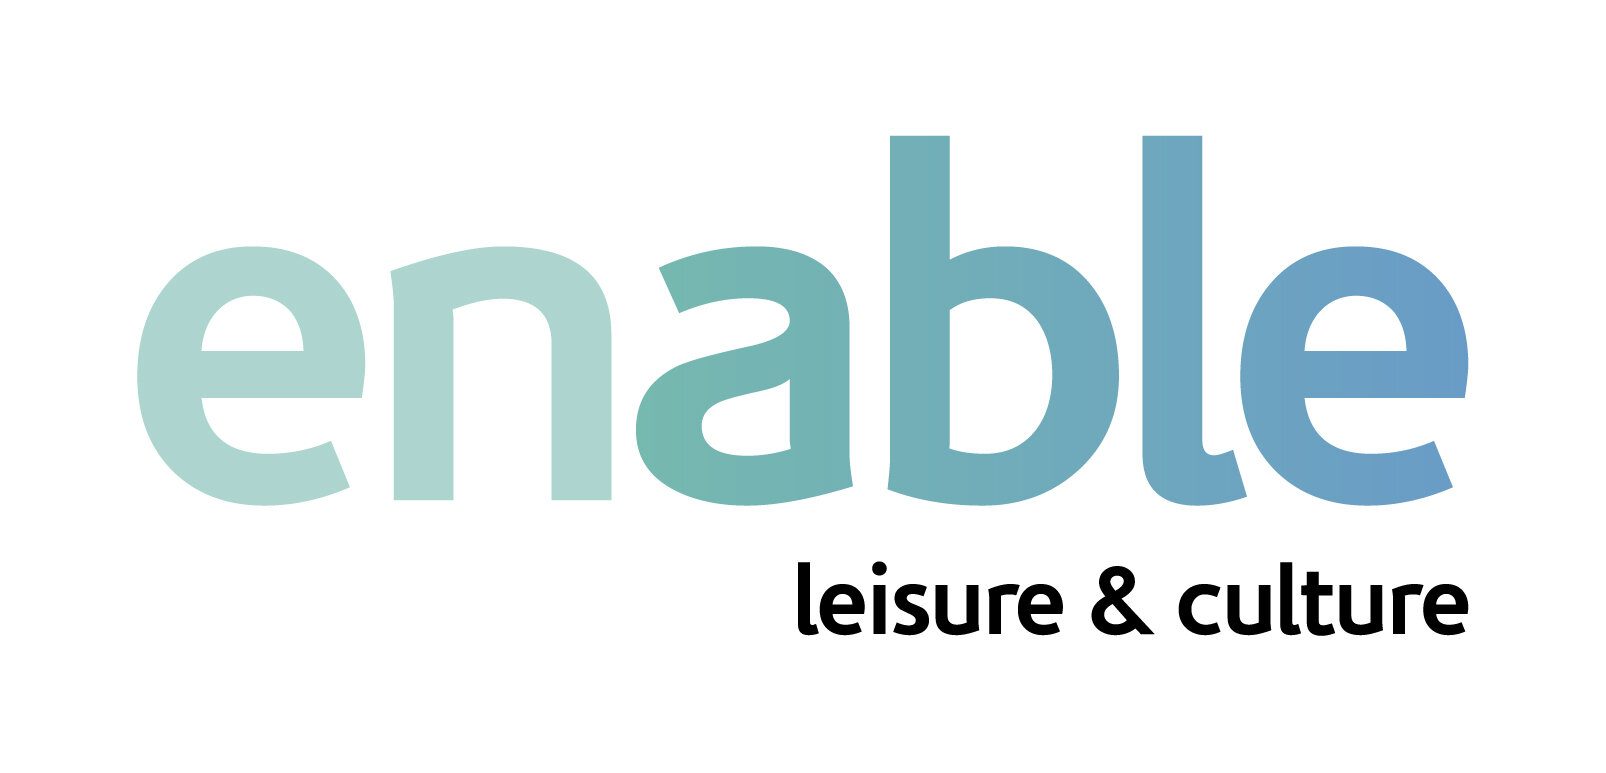 Enable Logo.jpg